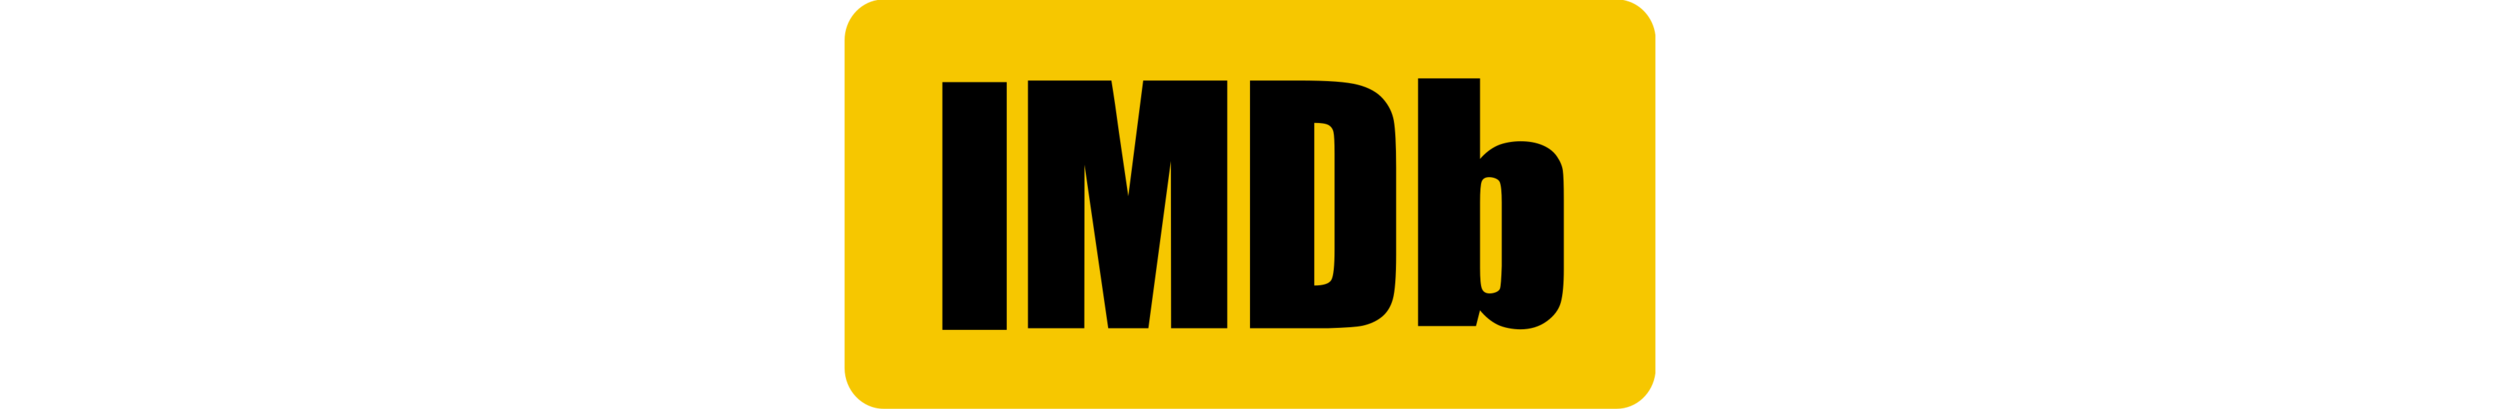 1200px-IMDB Logo 2016.svg.png